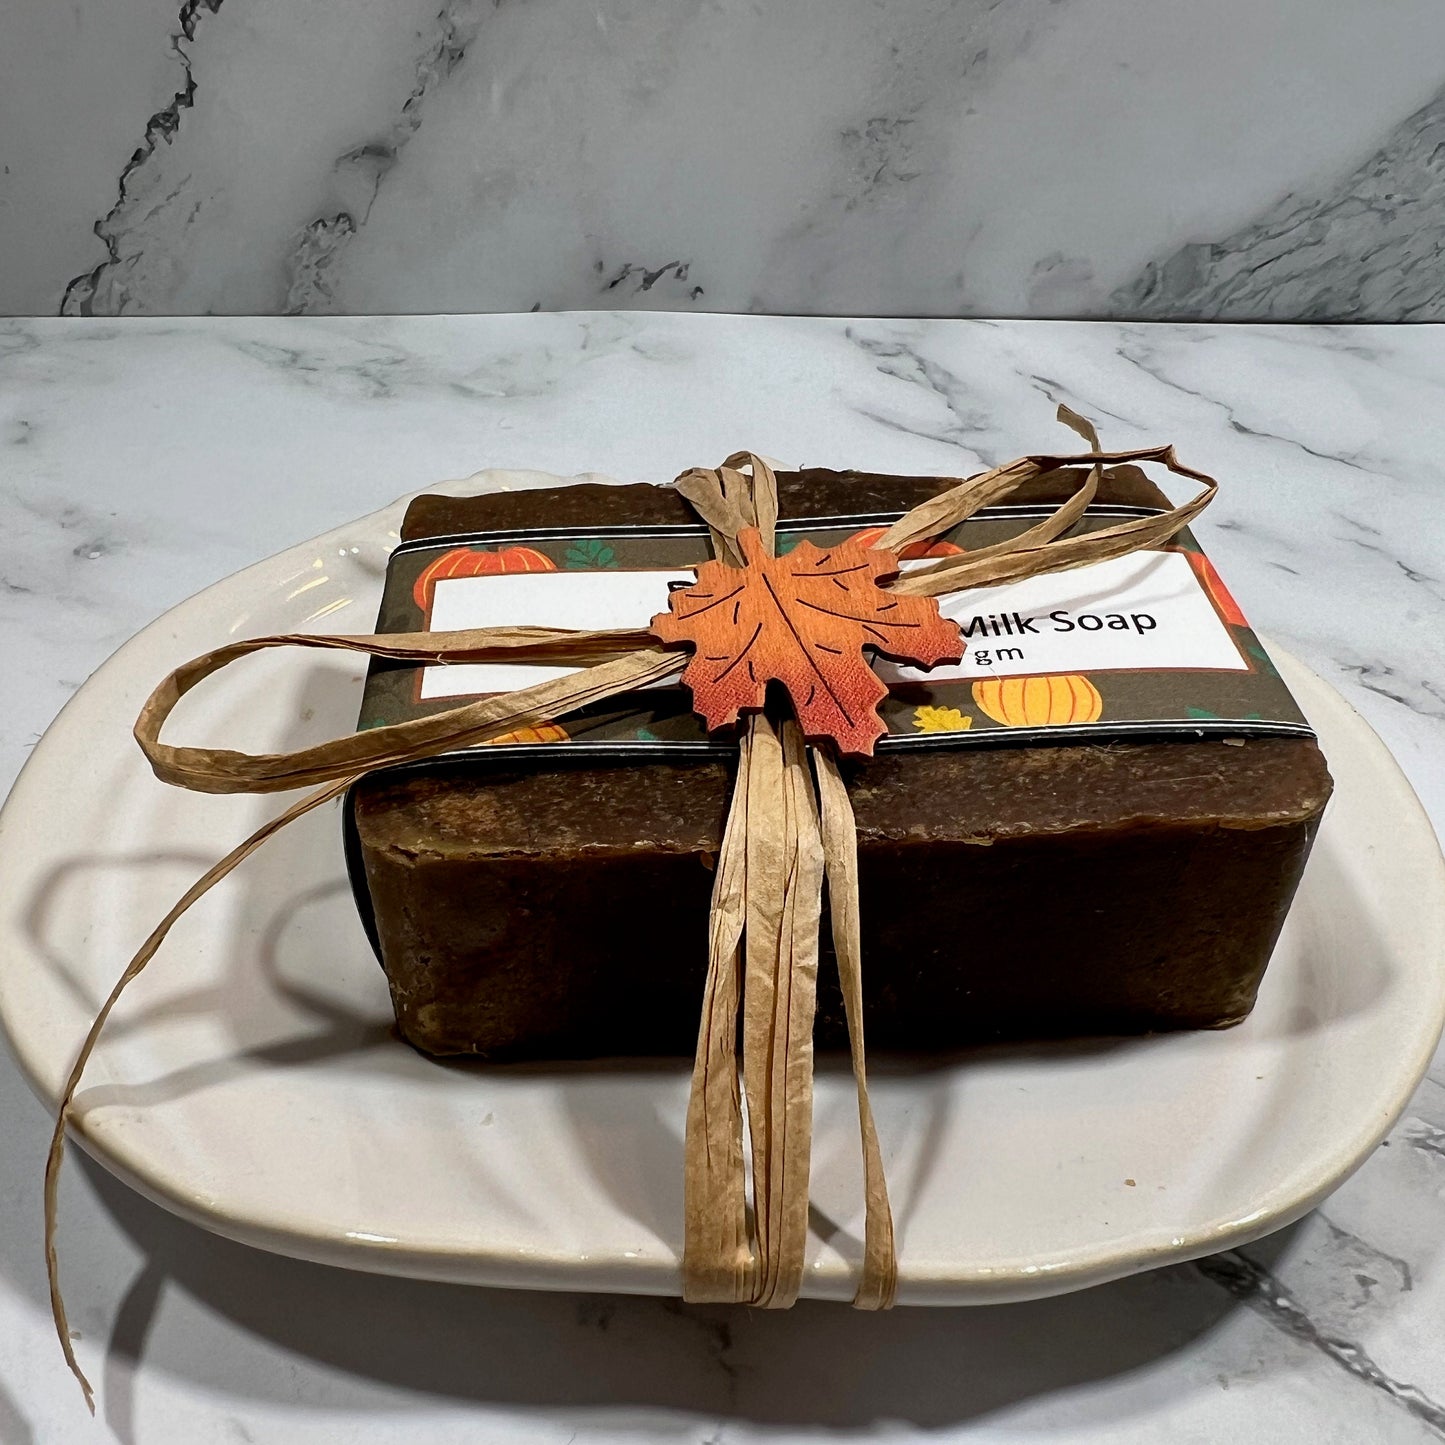 Fall Pumpkin Spice Soap Bars and Gift Sets